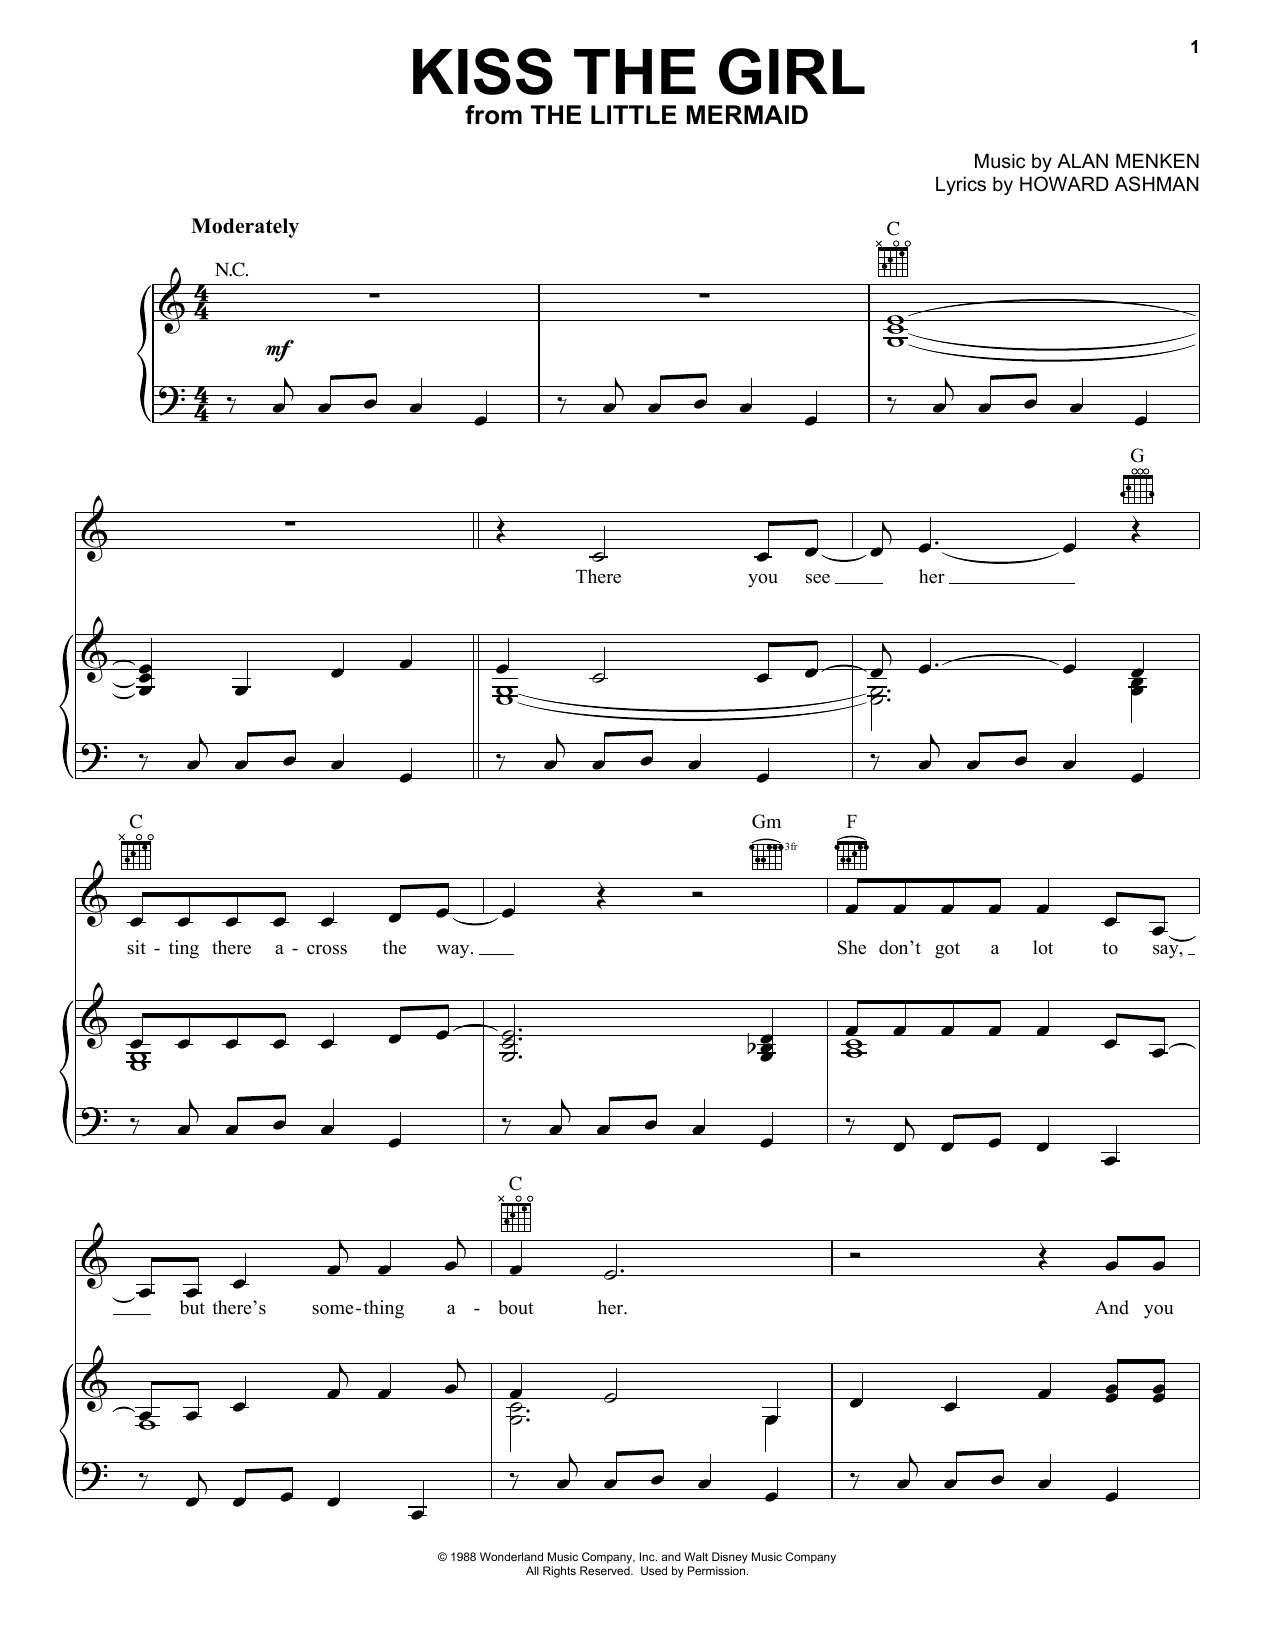 Alan Menken & Howard Ashman Kiss The Girl (from The Little Mermaid) Sheet Music Notes & Chords for Ukulele Chords/Lyrics - Download or Print PDF